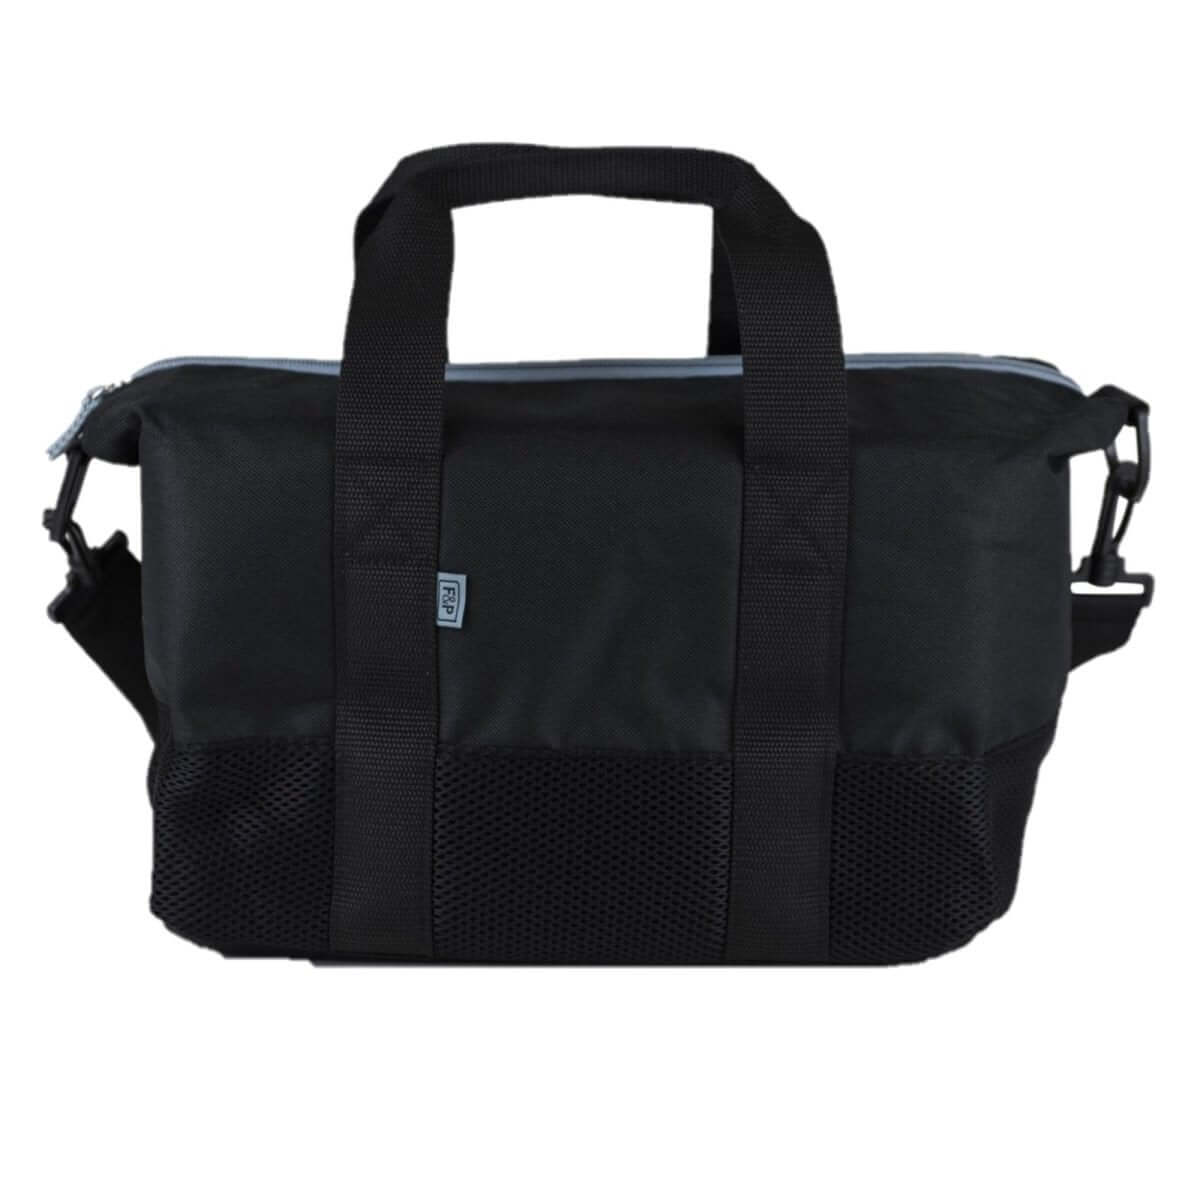 F&P SleepStyle Auto Carry Bag